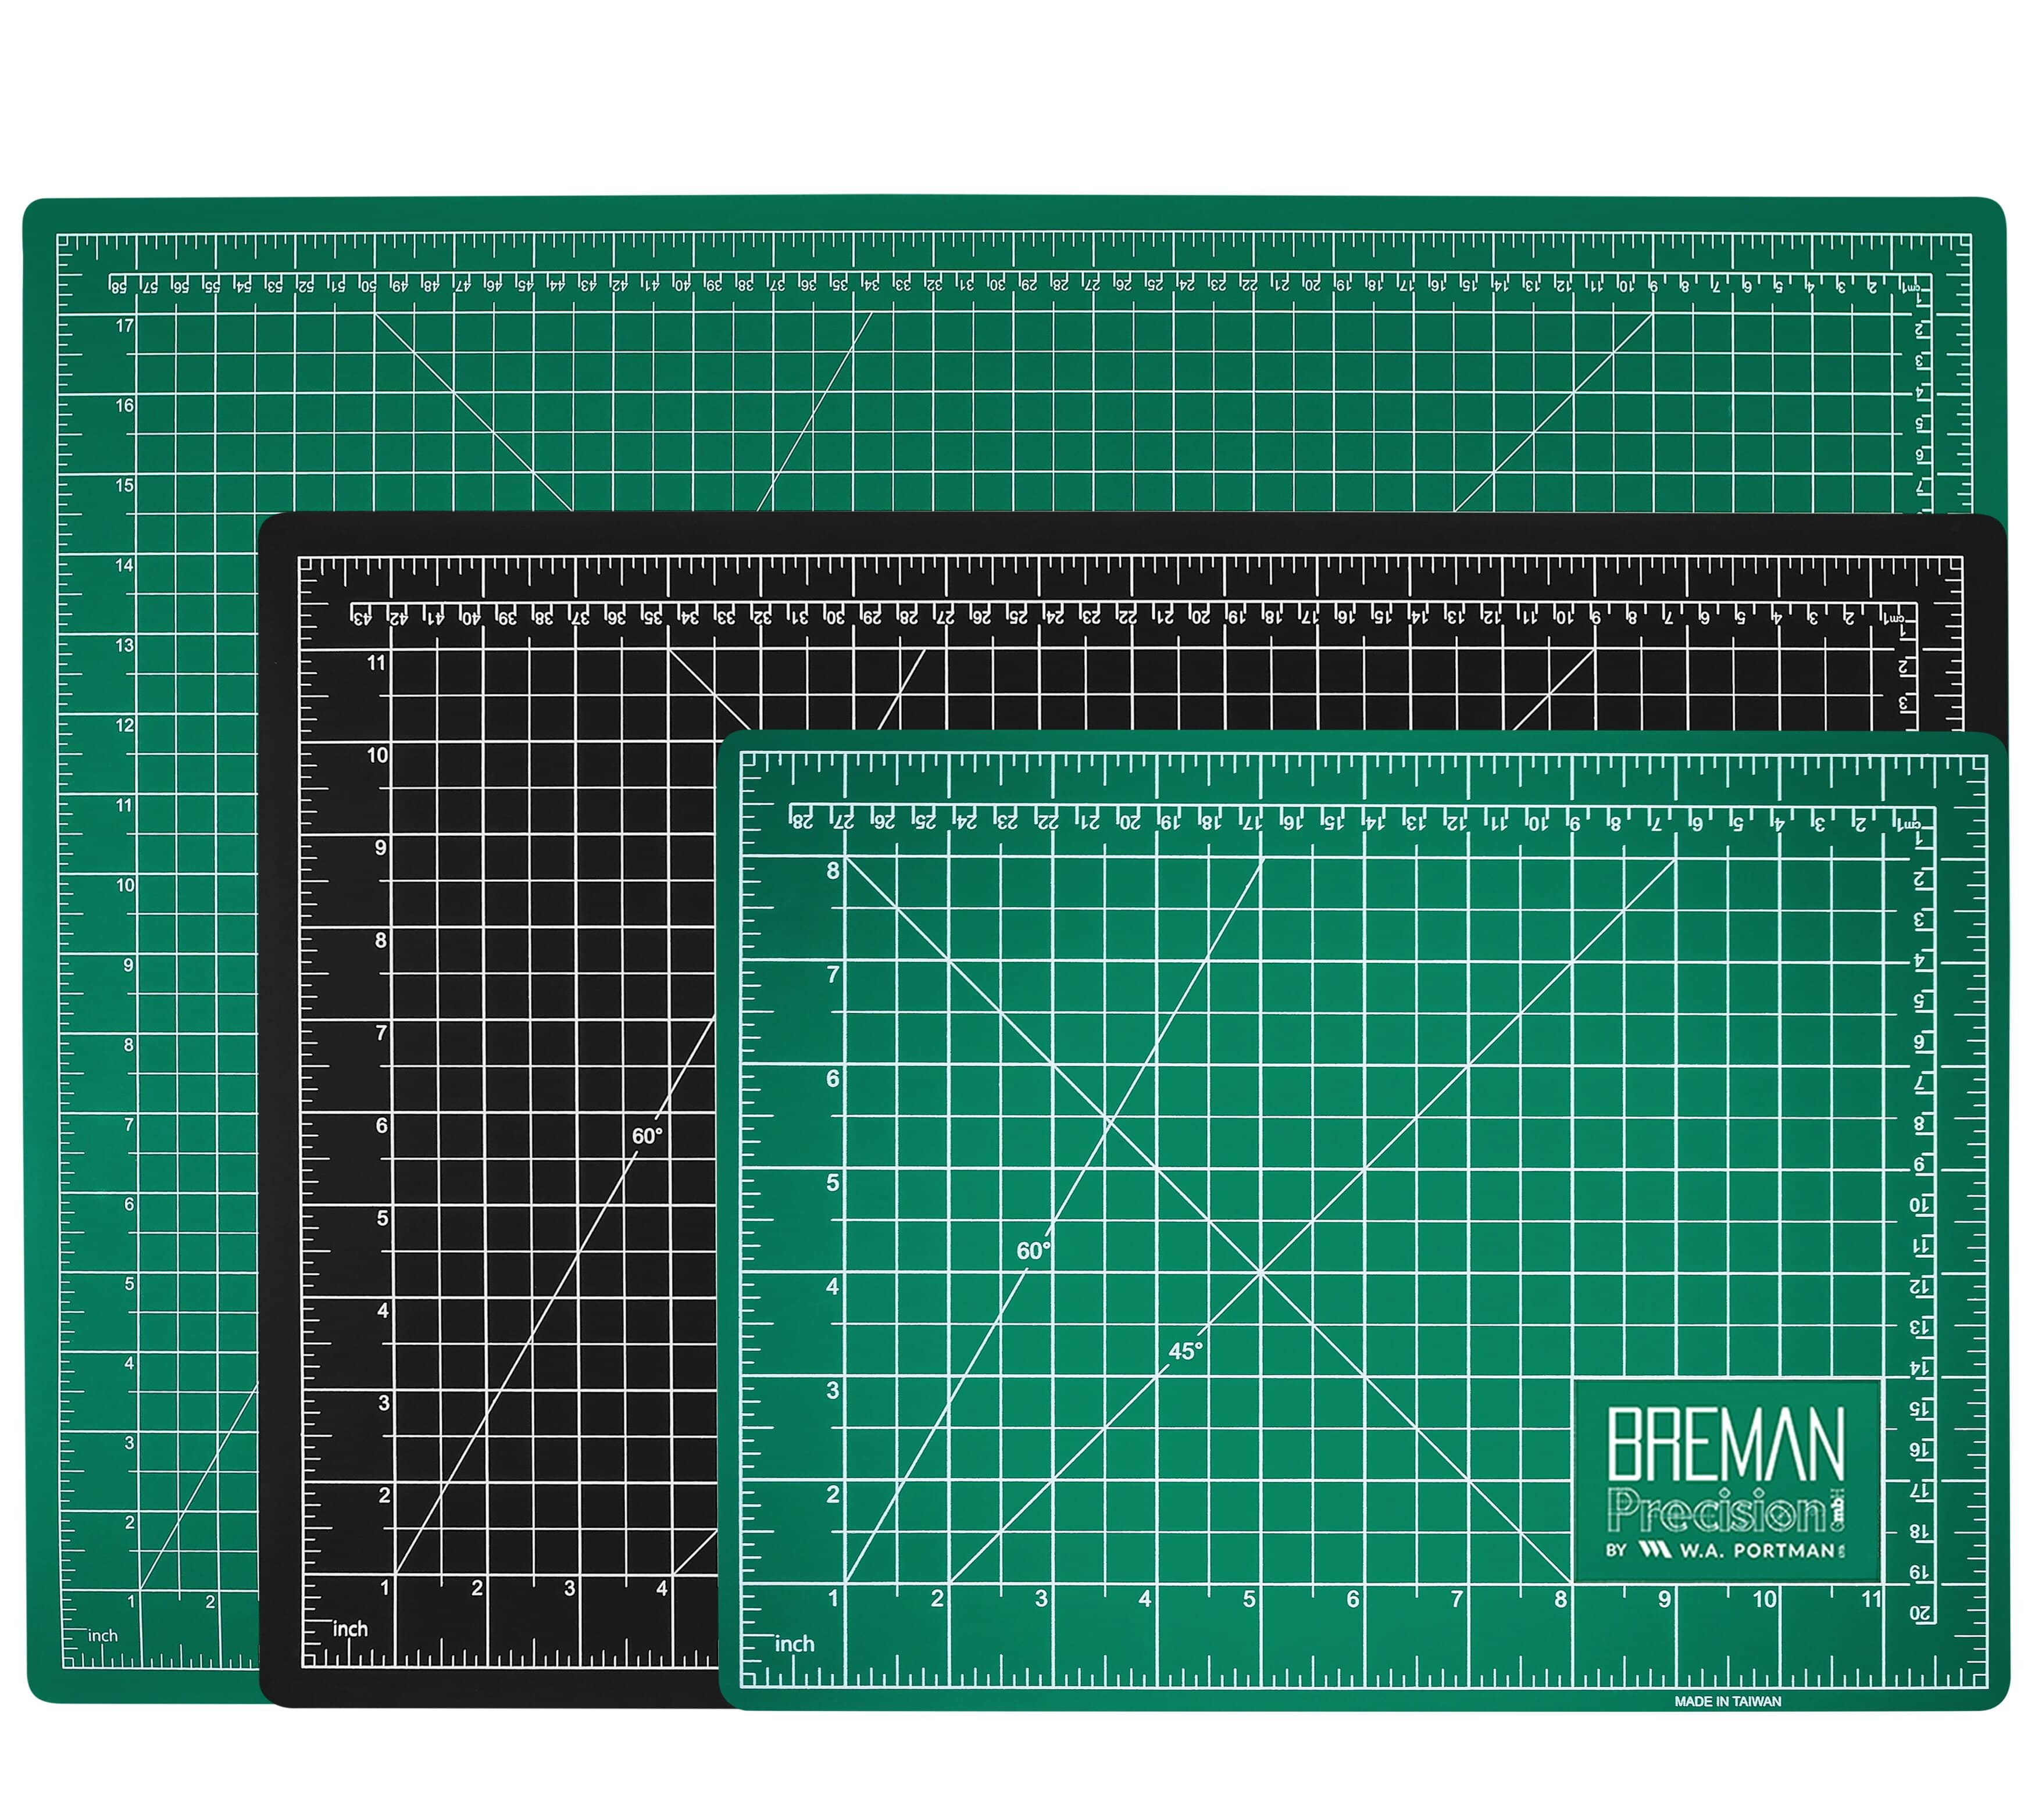 9 x 12 GREEN/BLACK Self Healing 5-Ply Double Sided Durable PVC Cutting Mat  